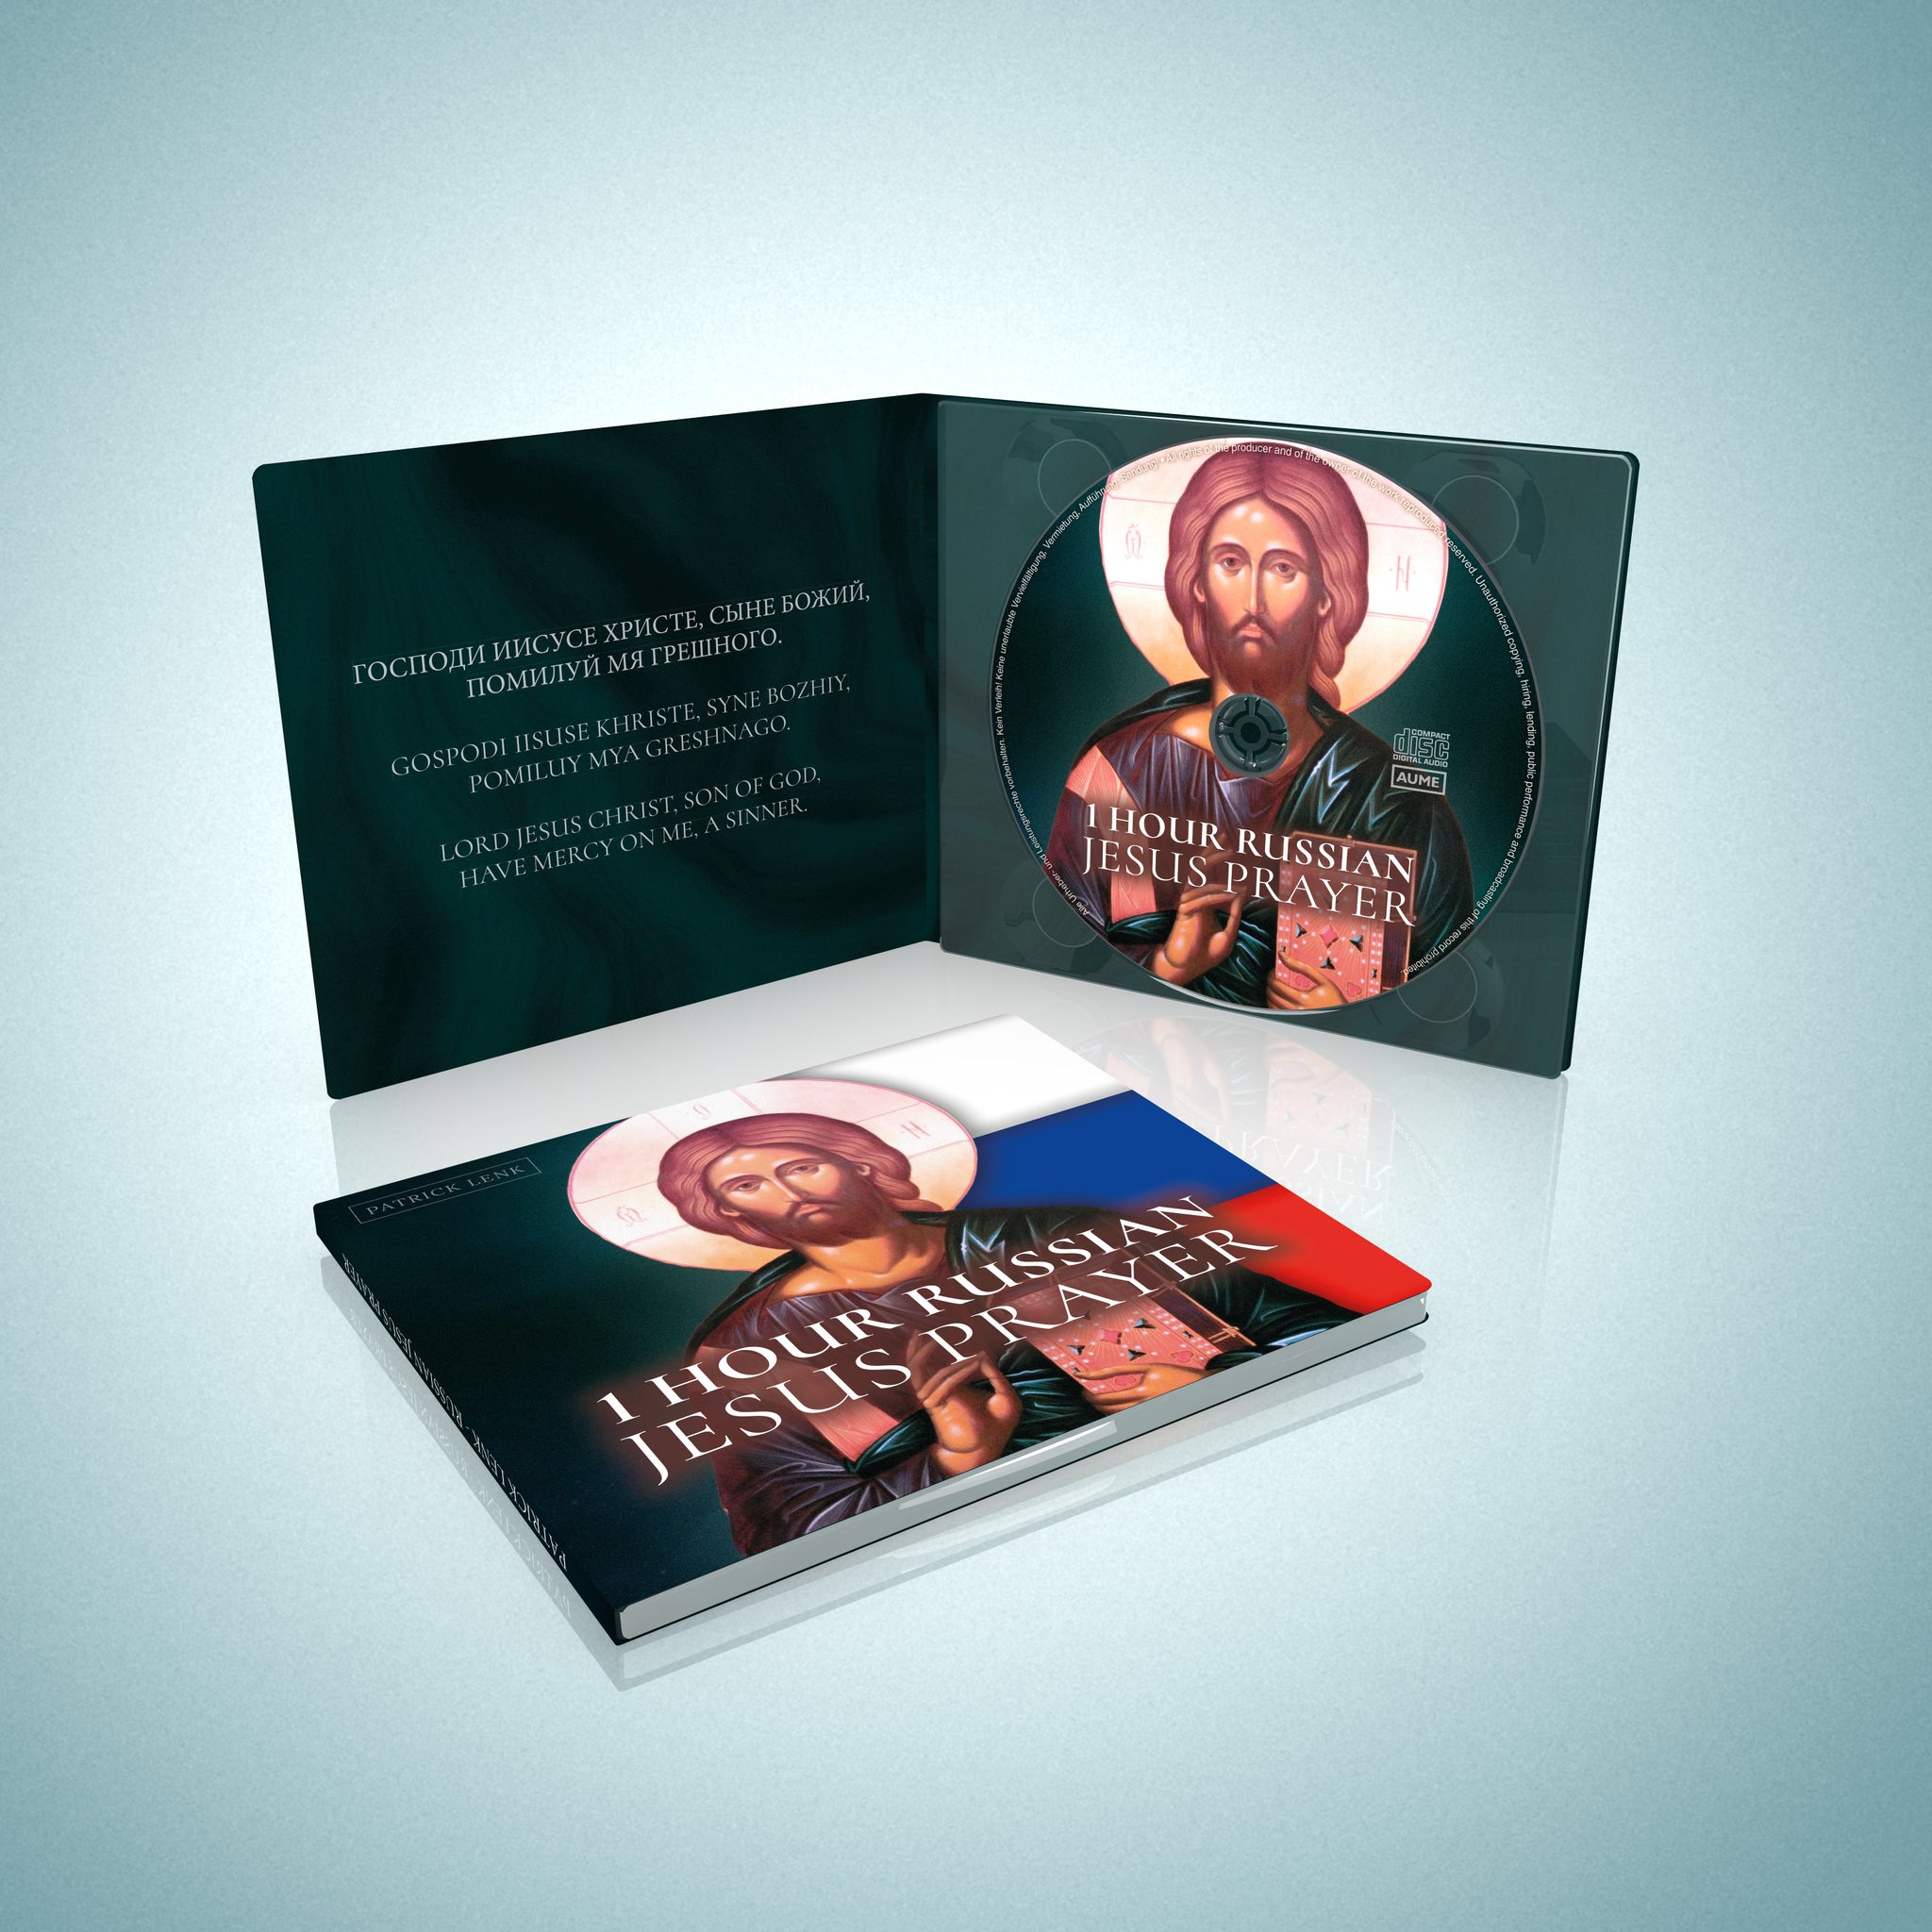 1 Hour Jesus Prayer Russian (CD)